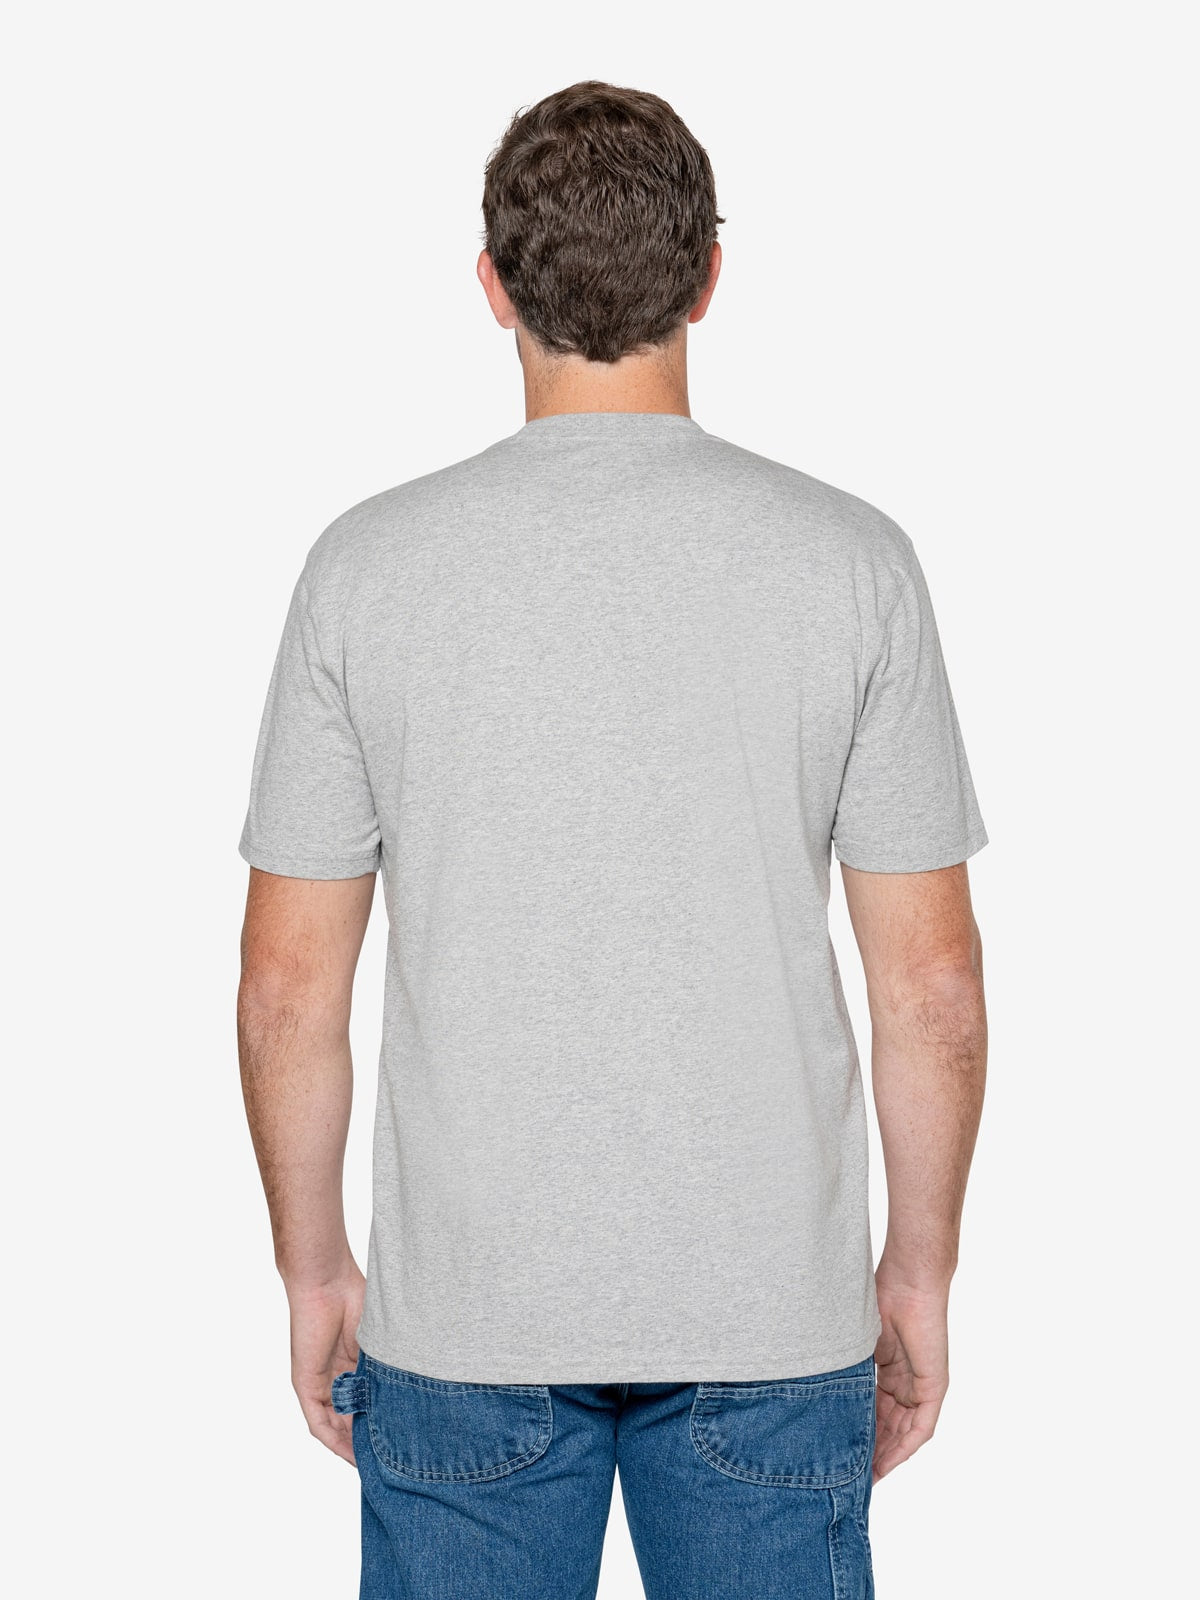 Insect Shield Men's UPF Dri-Balance Short Sleeve Pocket T-Shirt